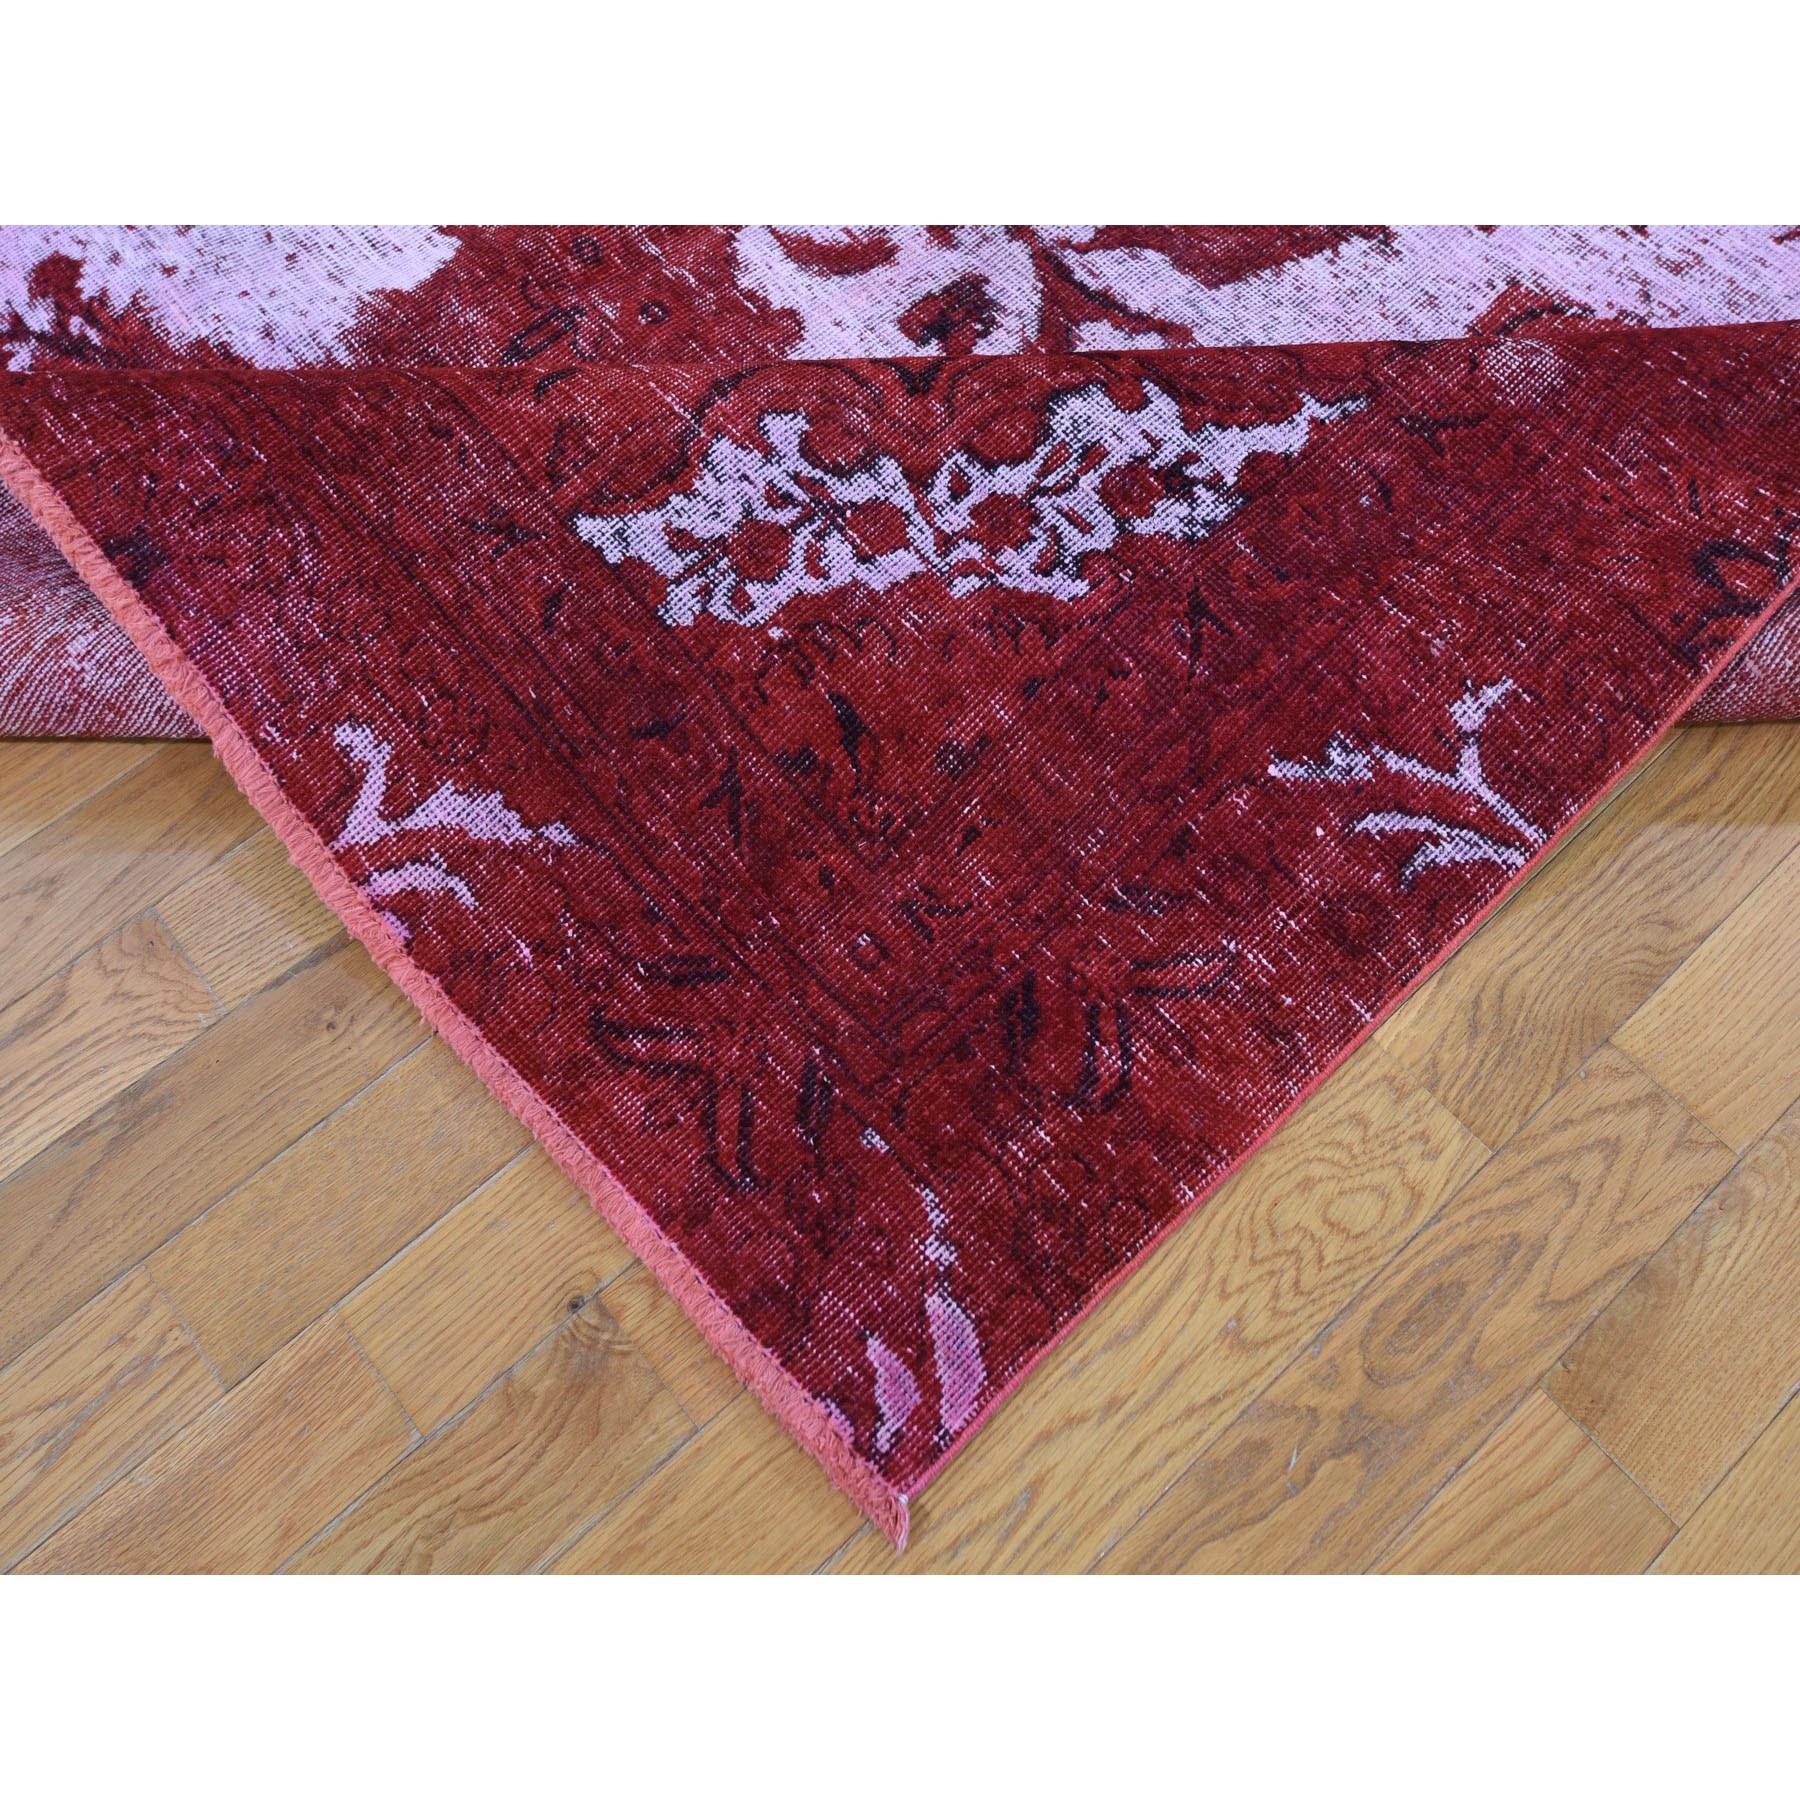 7'x9'8" Hand Woven Overdyed Red Persian Tabriz Barjasta Vintage Rug 